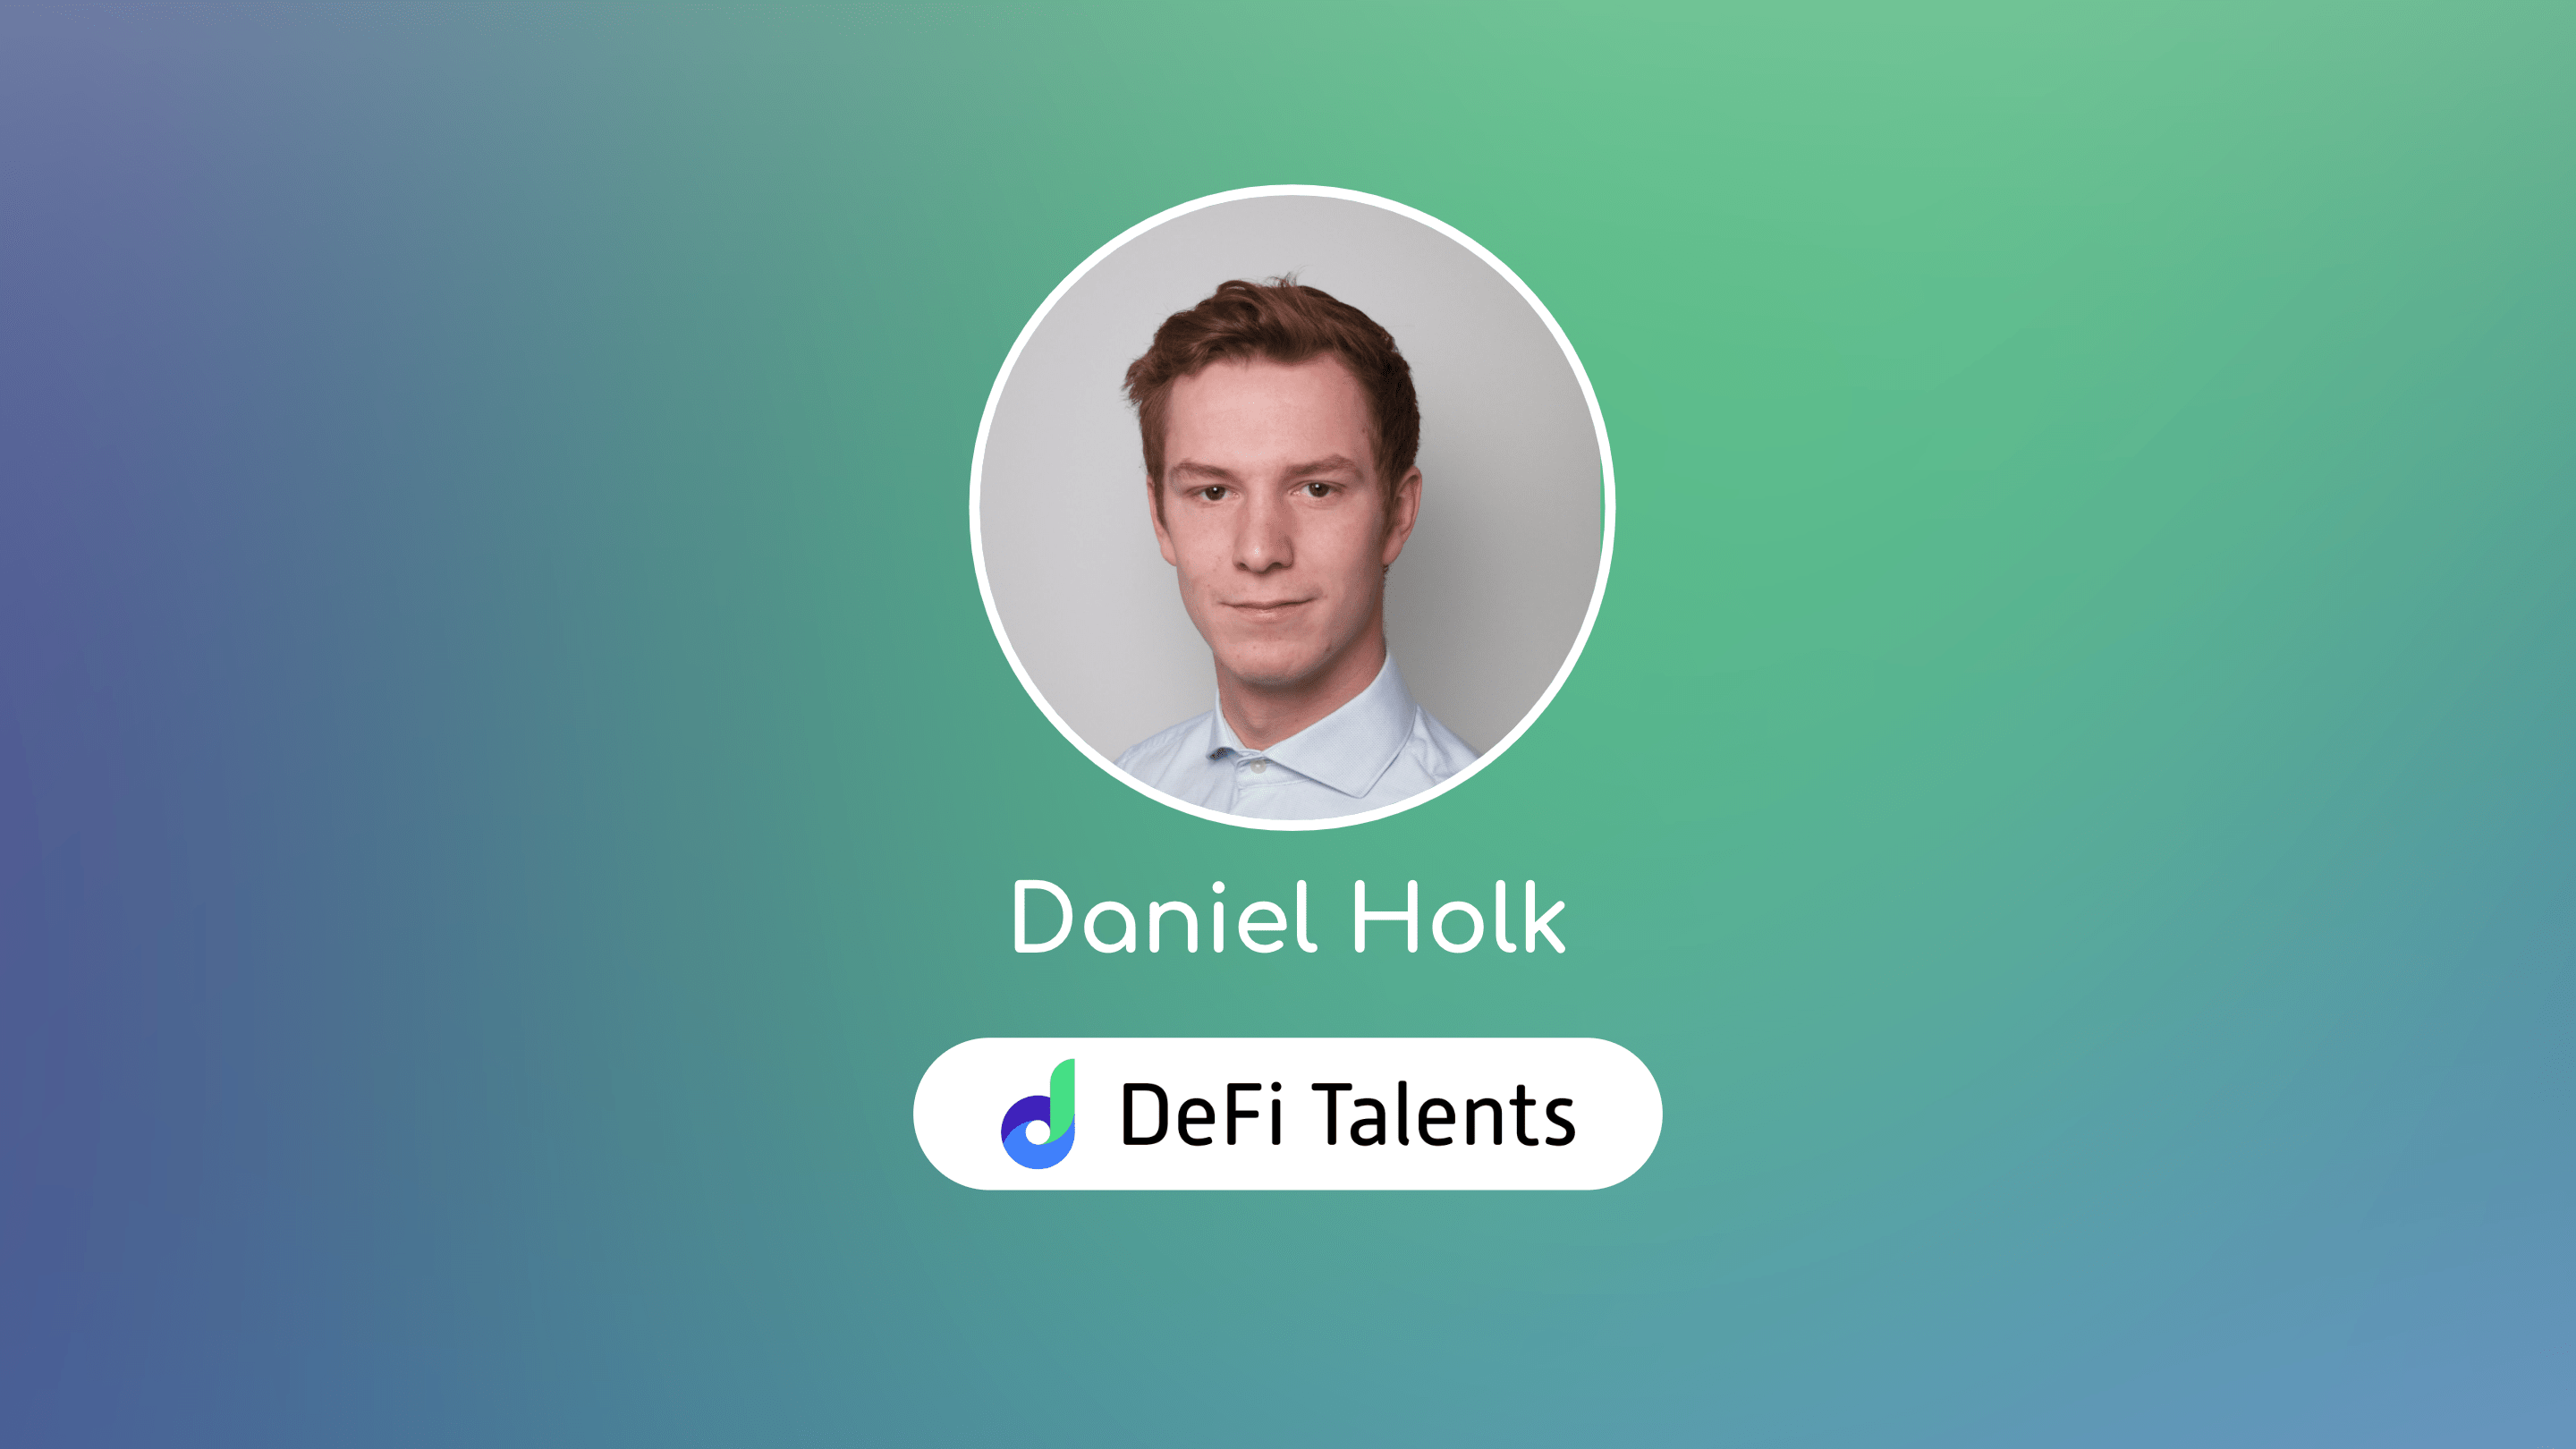 DeFi Talents Mentor – Daniel Holk